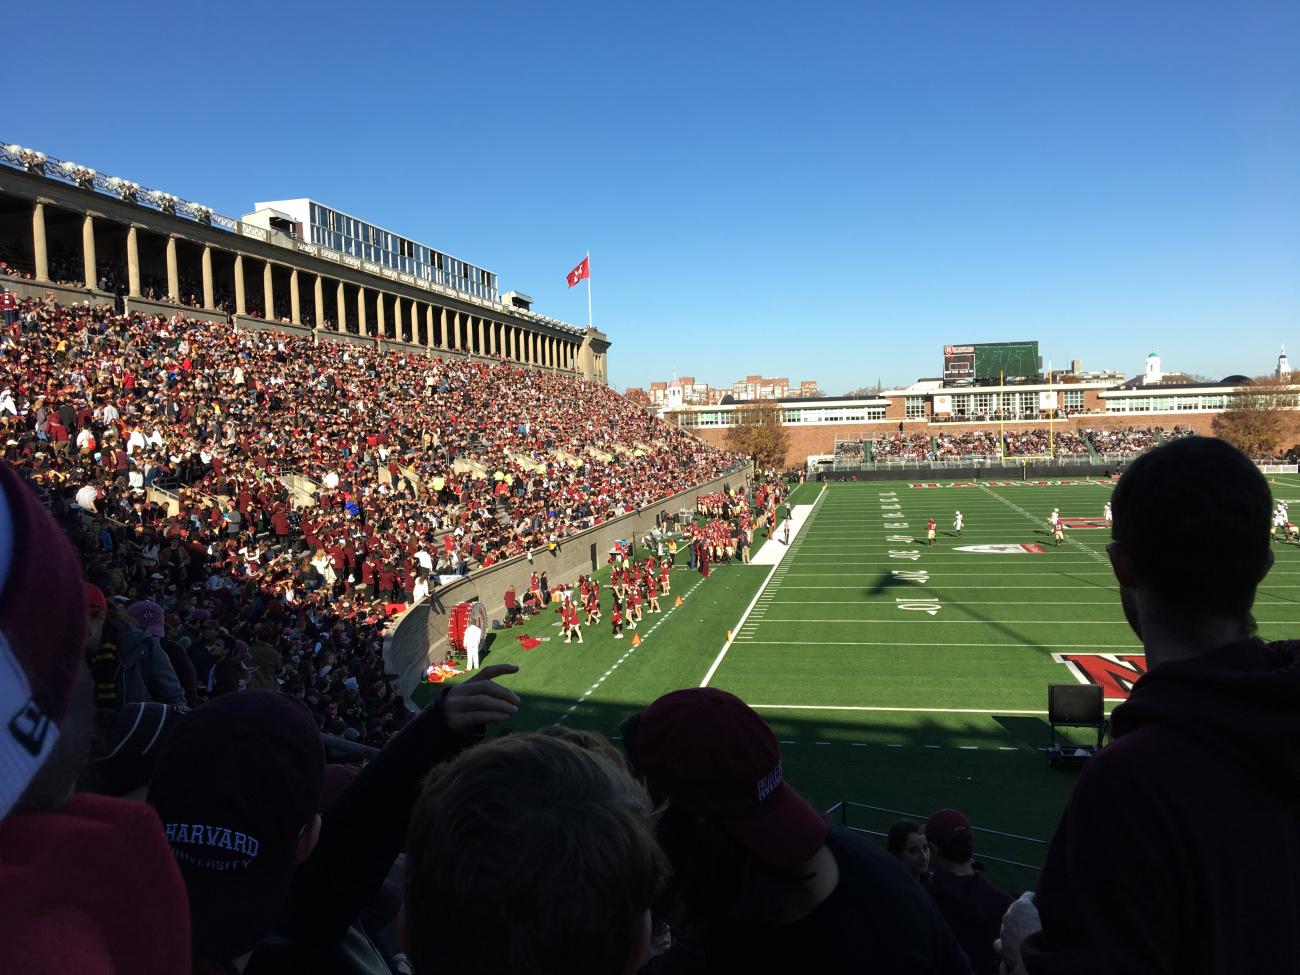 2016 Harvard-Yale football game in the Harvard Stadium